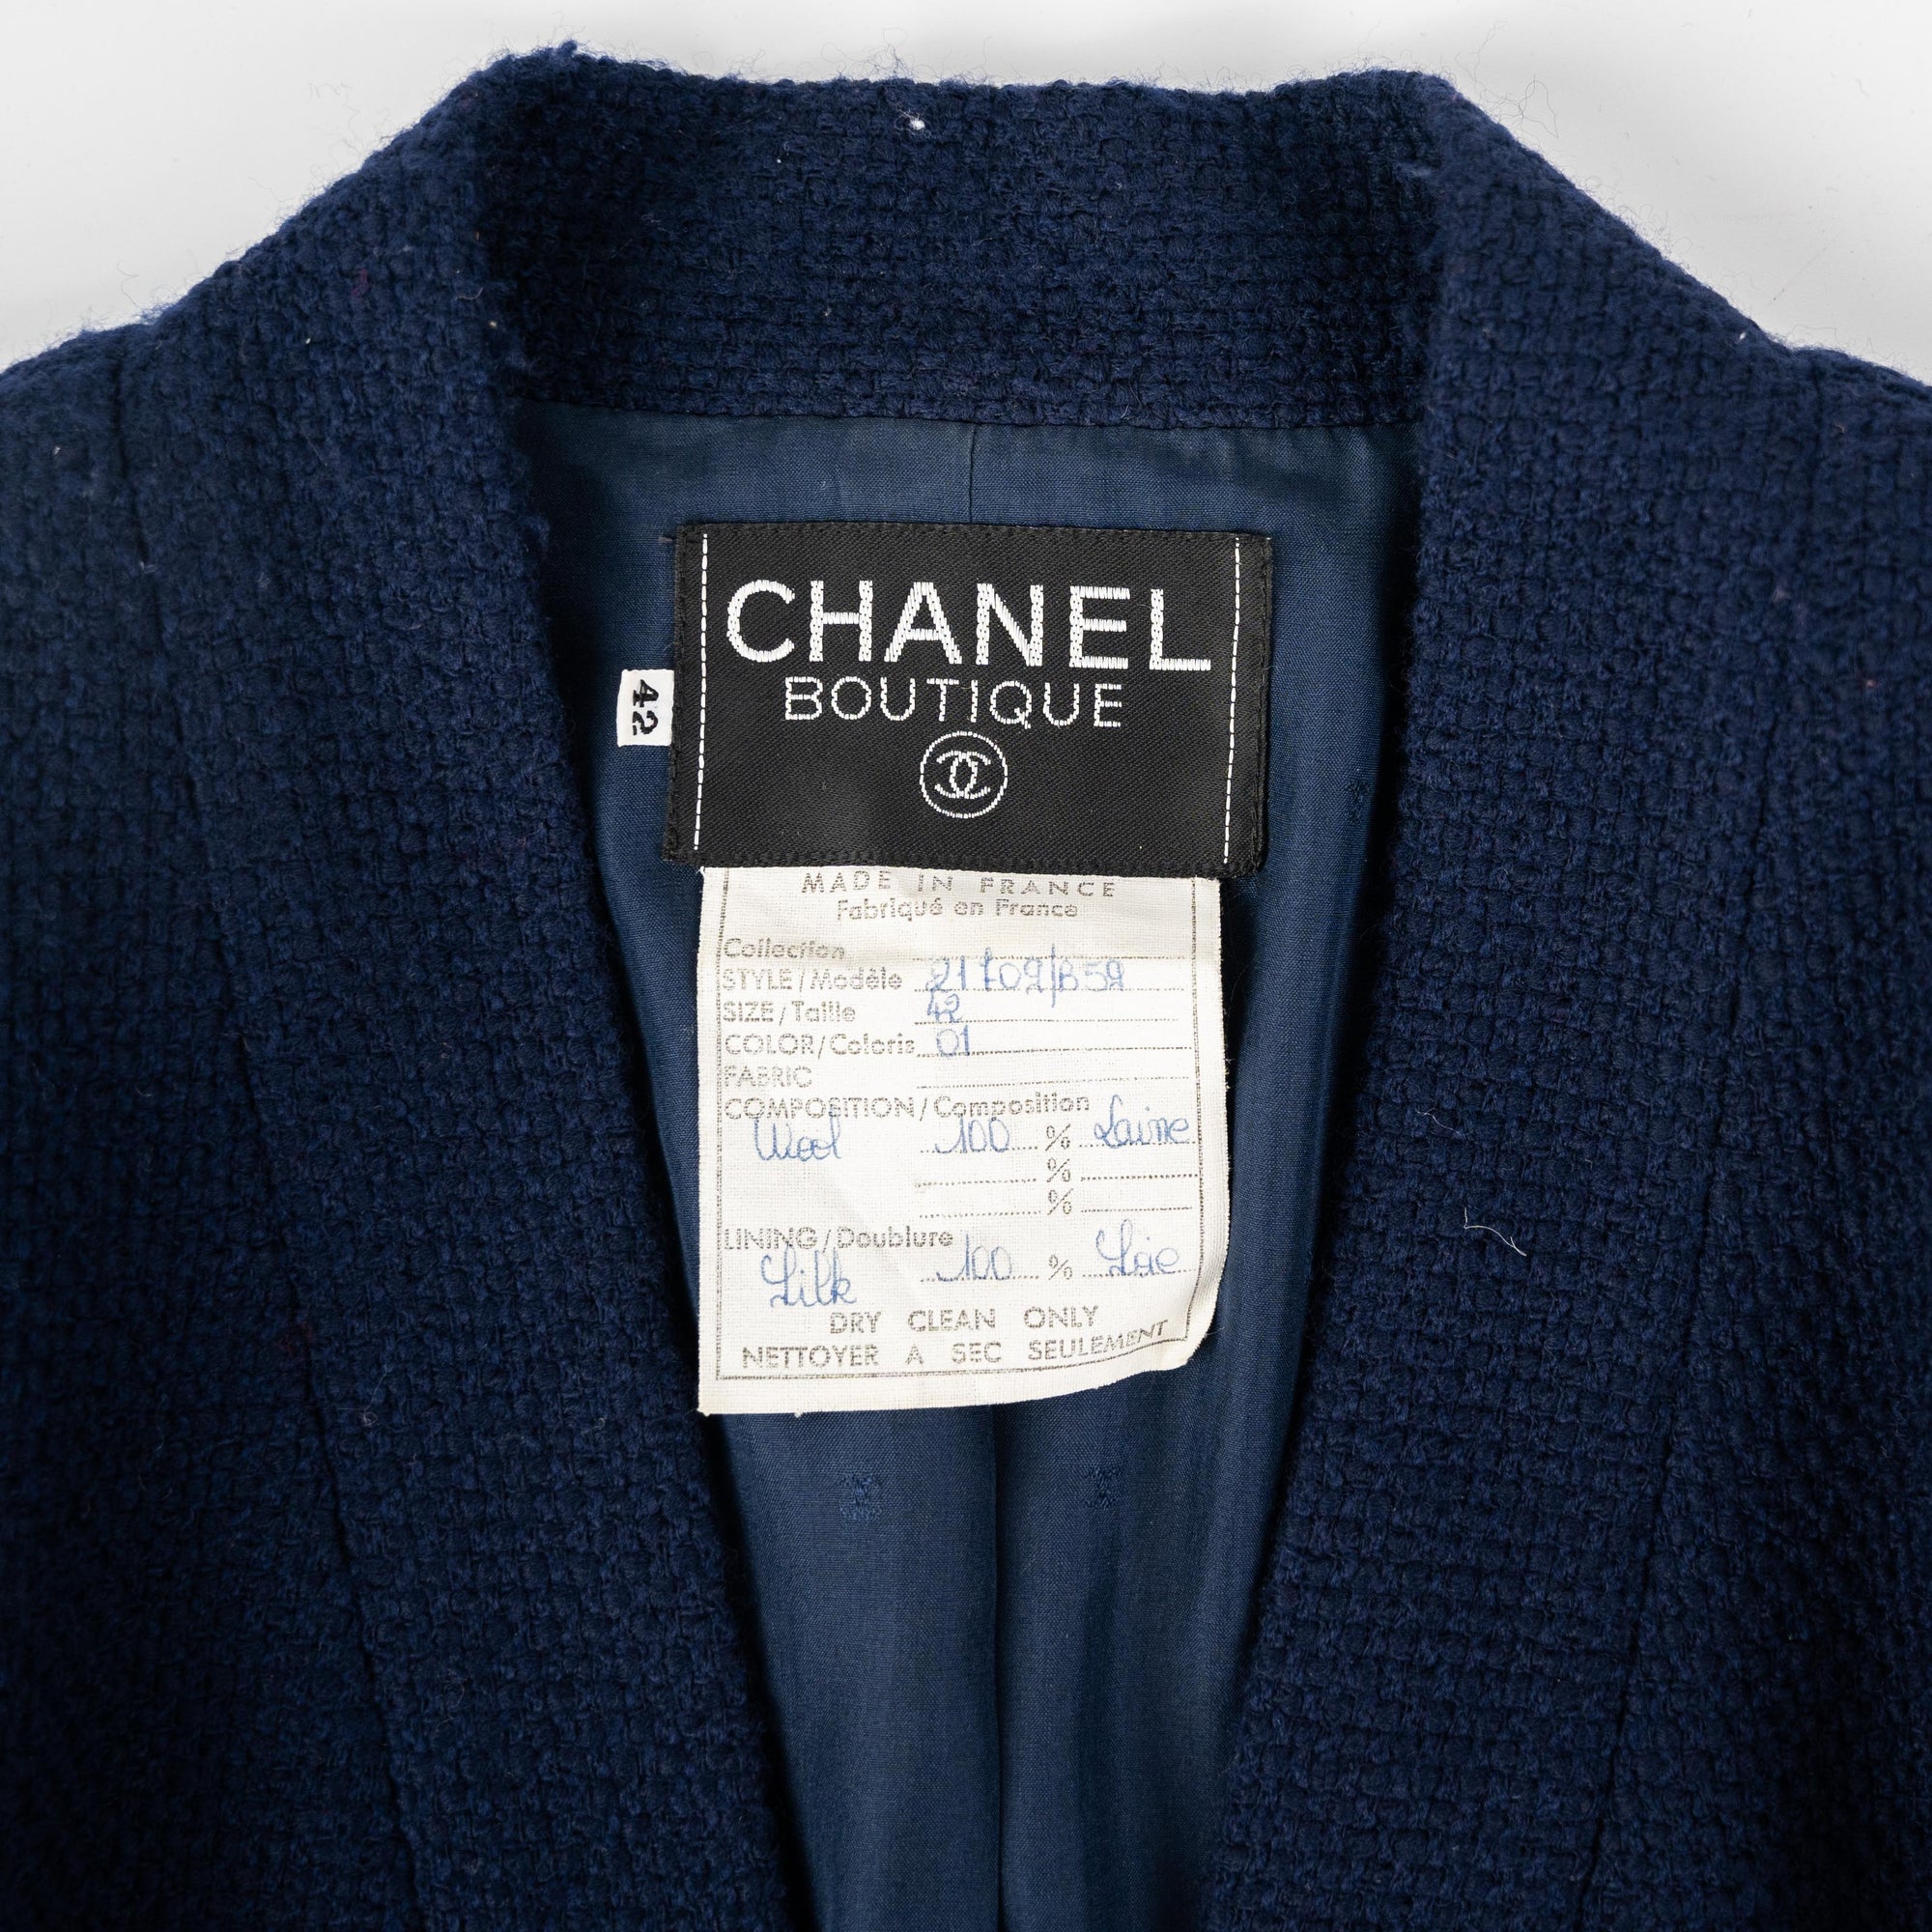 Chanel Uniform  Etsy